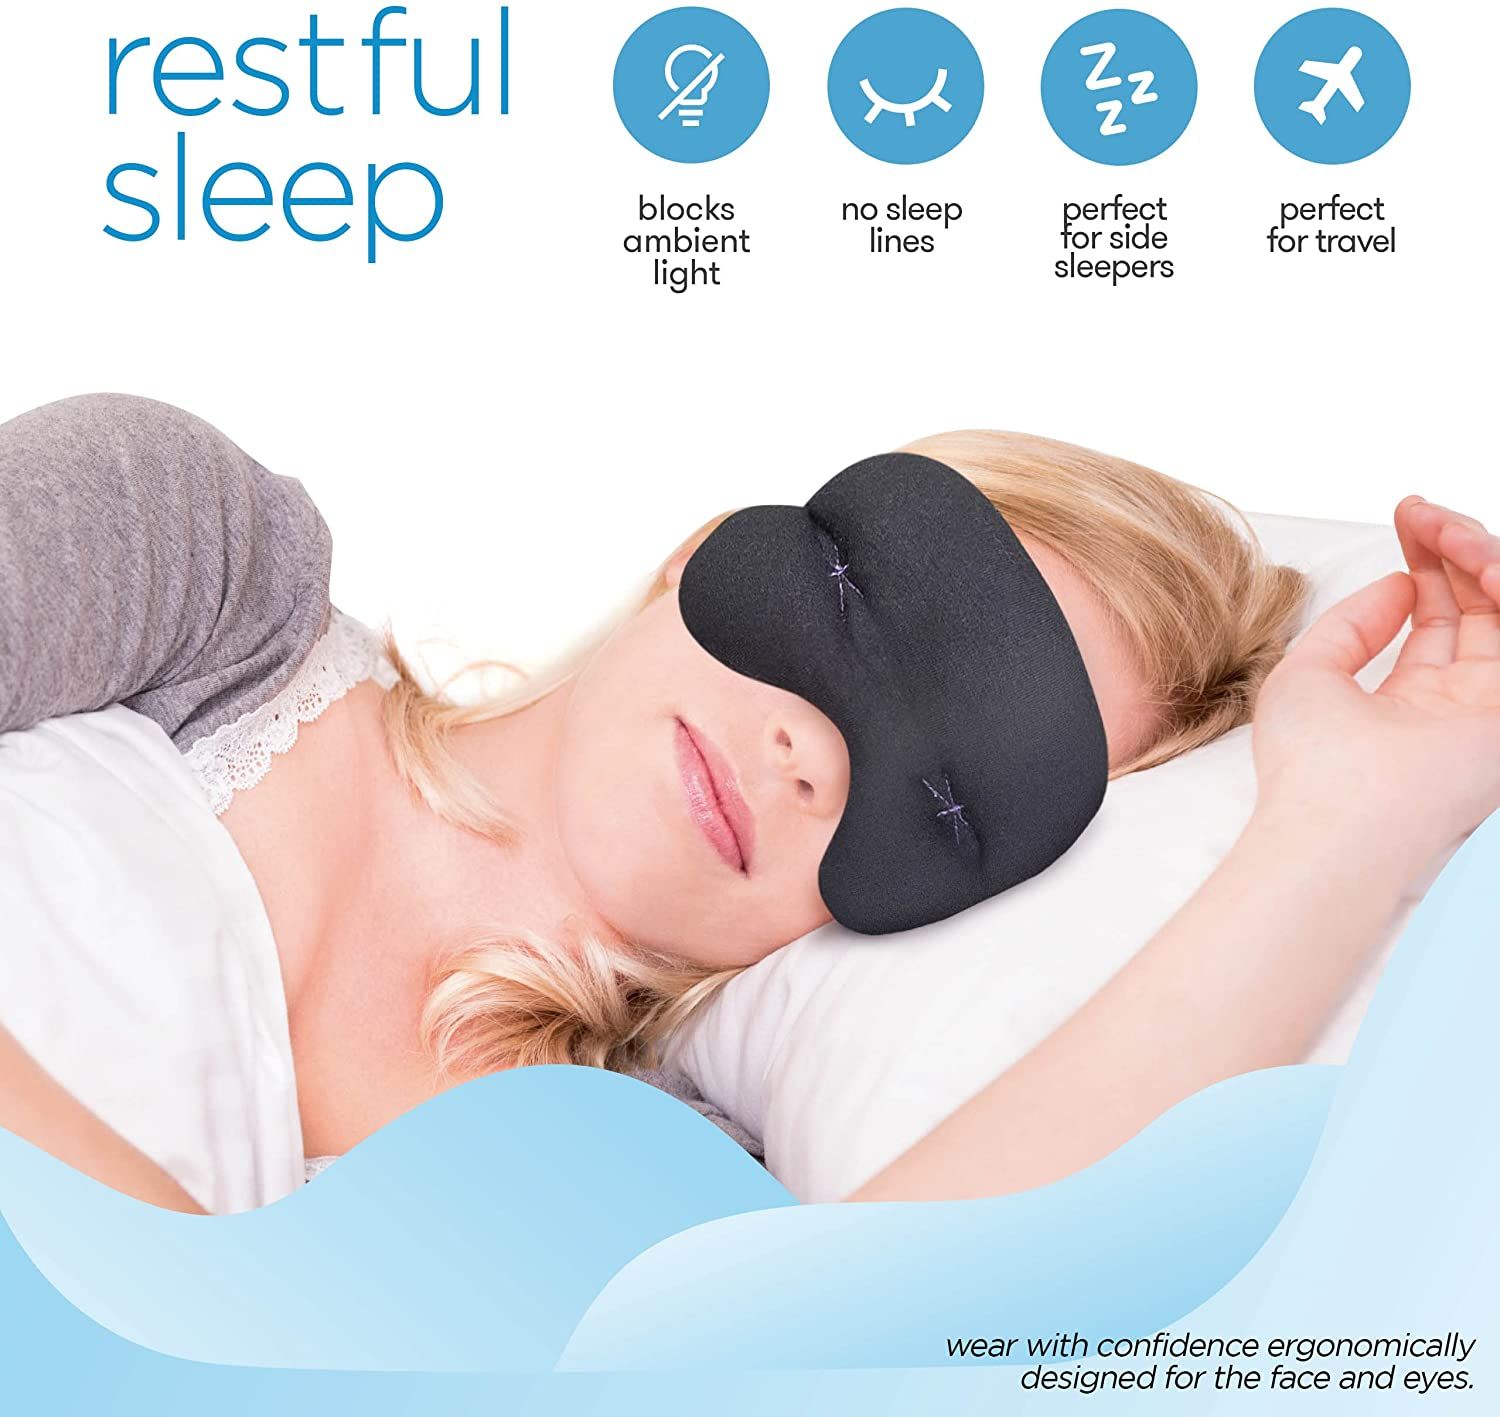 Imak Eye Pillow Pain Relief Mask - 1 ct